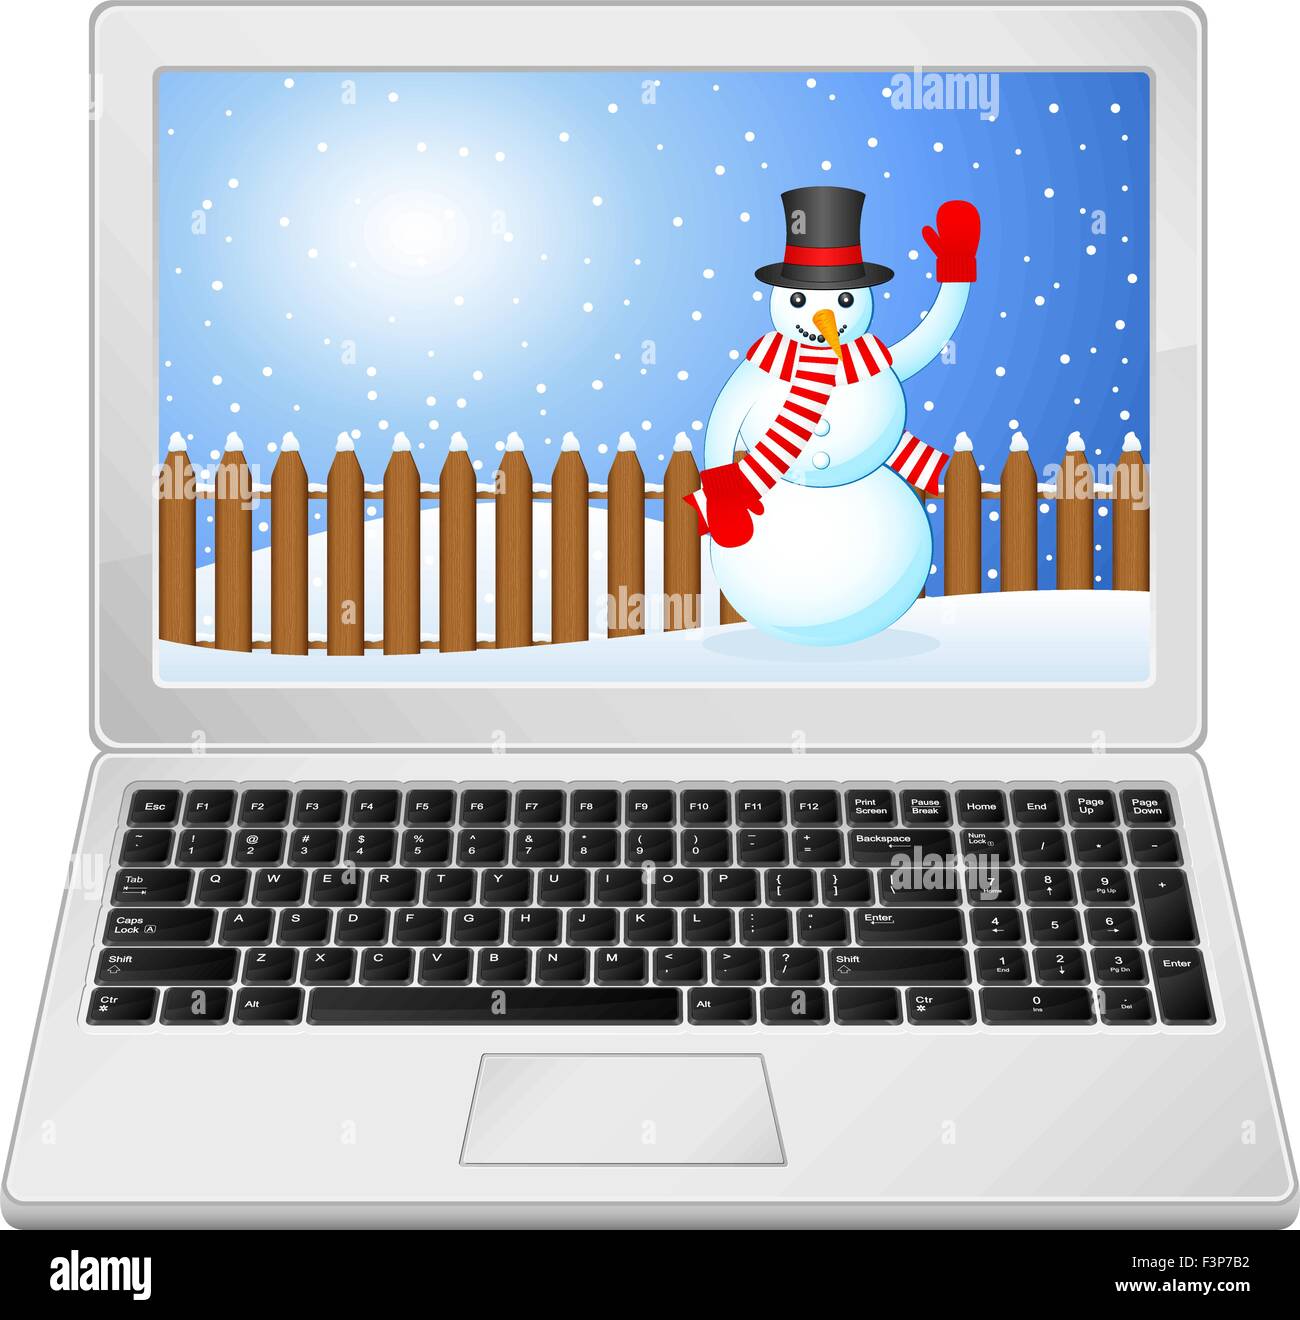 Grigio laptop con paesaggio invernale. Illustrazione Vettoriale Illustrazione Vettoriale